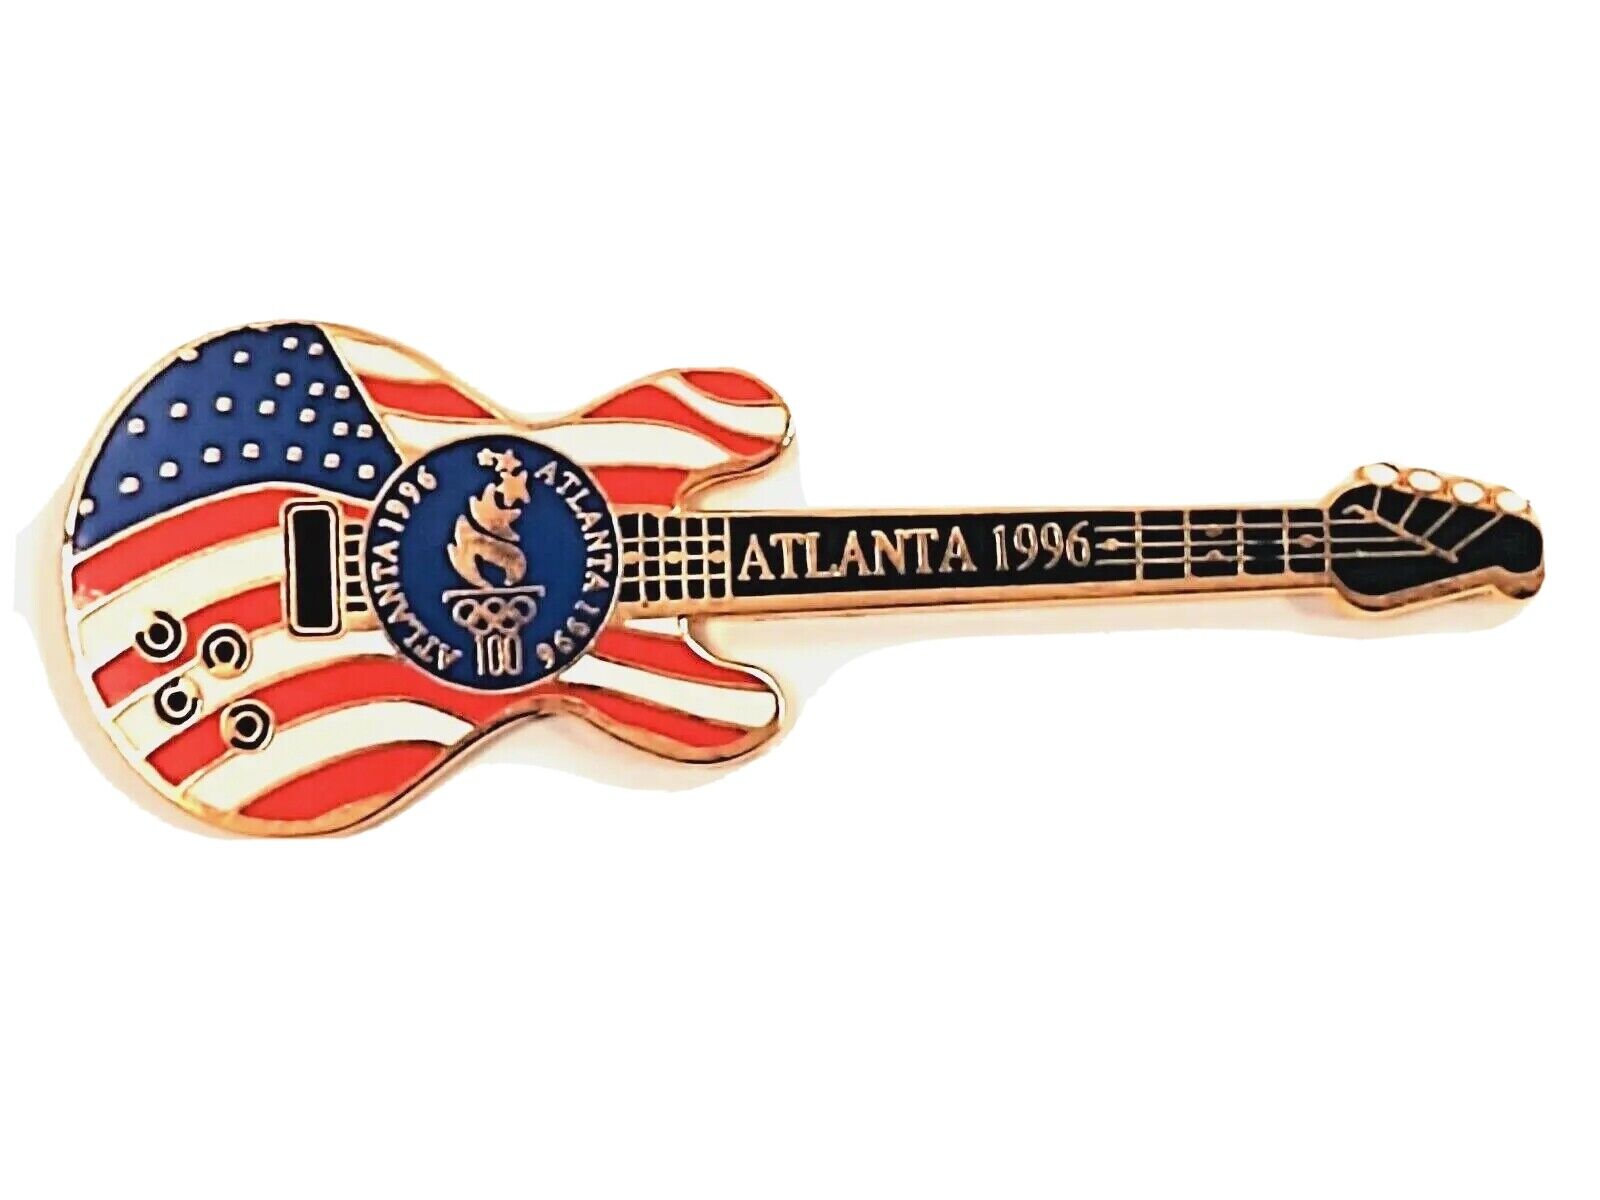 1996 Atlanta Olympics Team USA ATLANTA 1996 American Flag Guitar Hat Lapel Pin